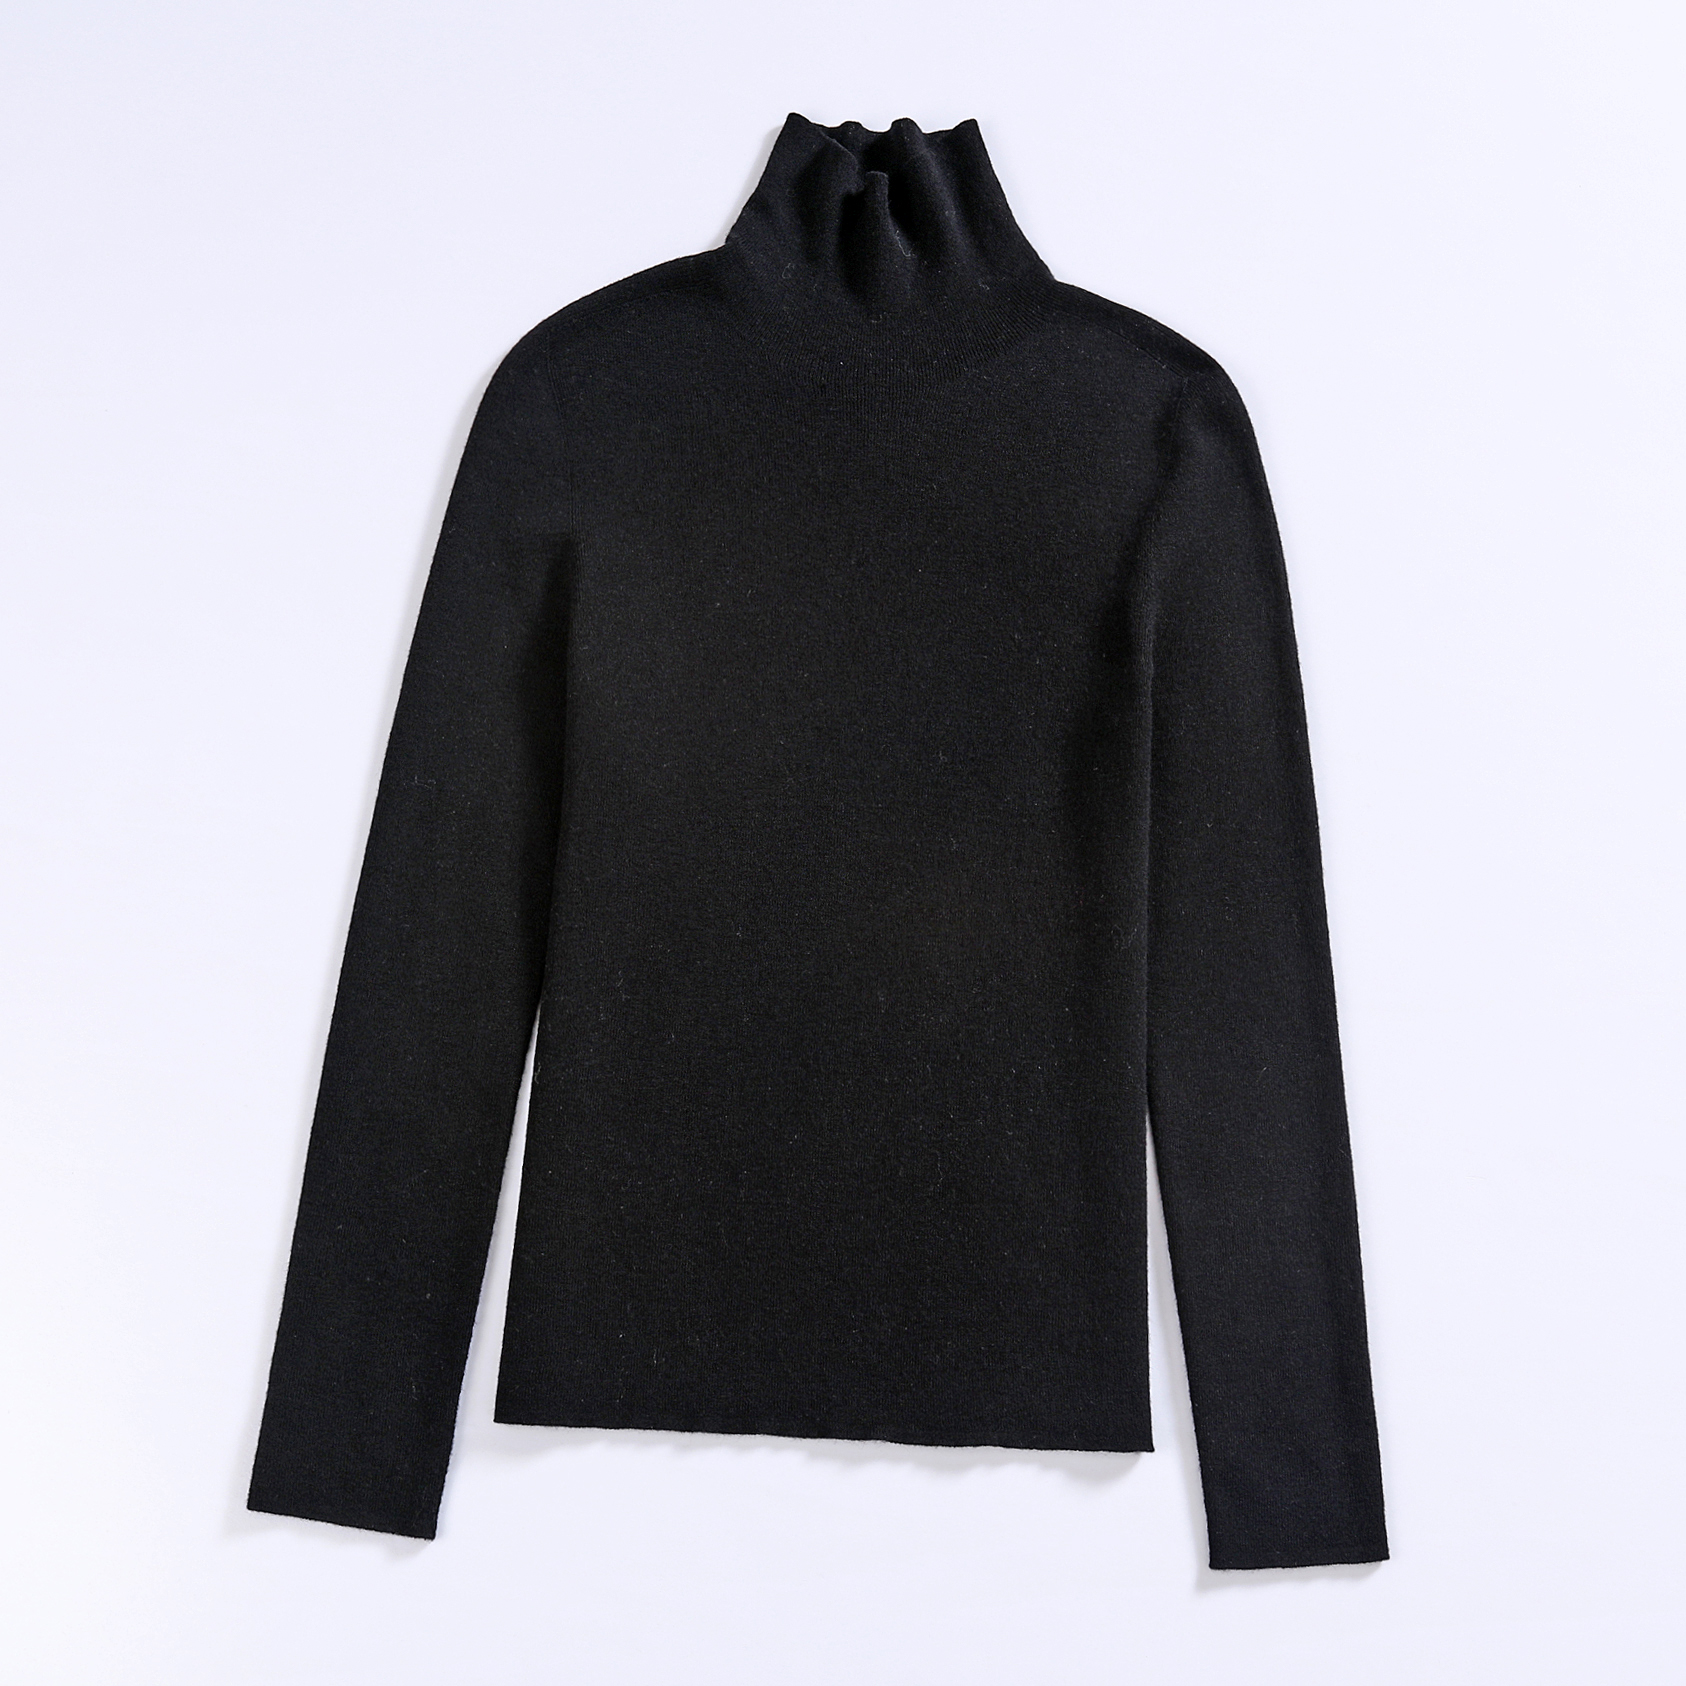 100% Merino Wool Sweater for Women, Half -Collar, Pollover